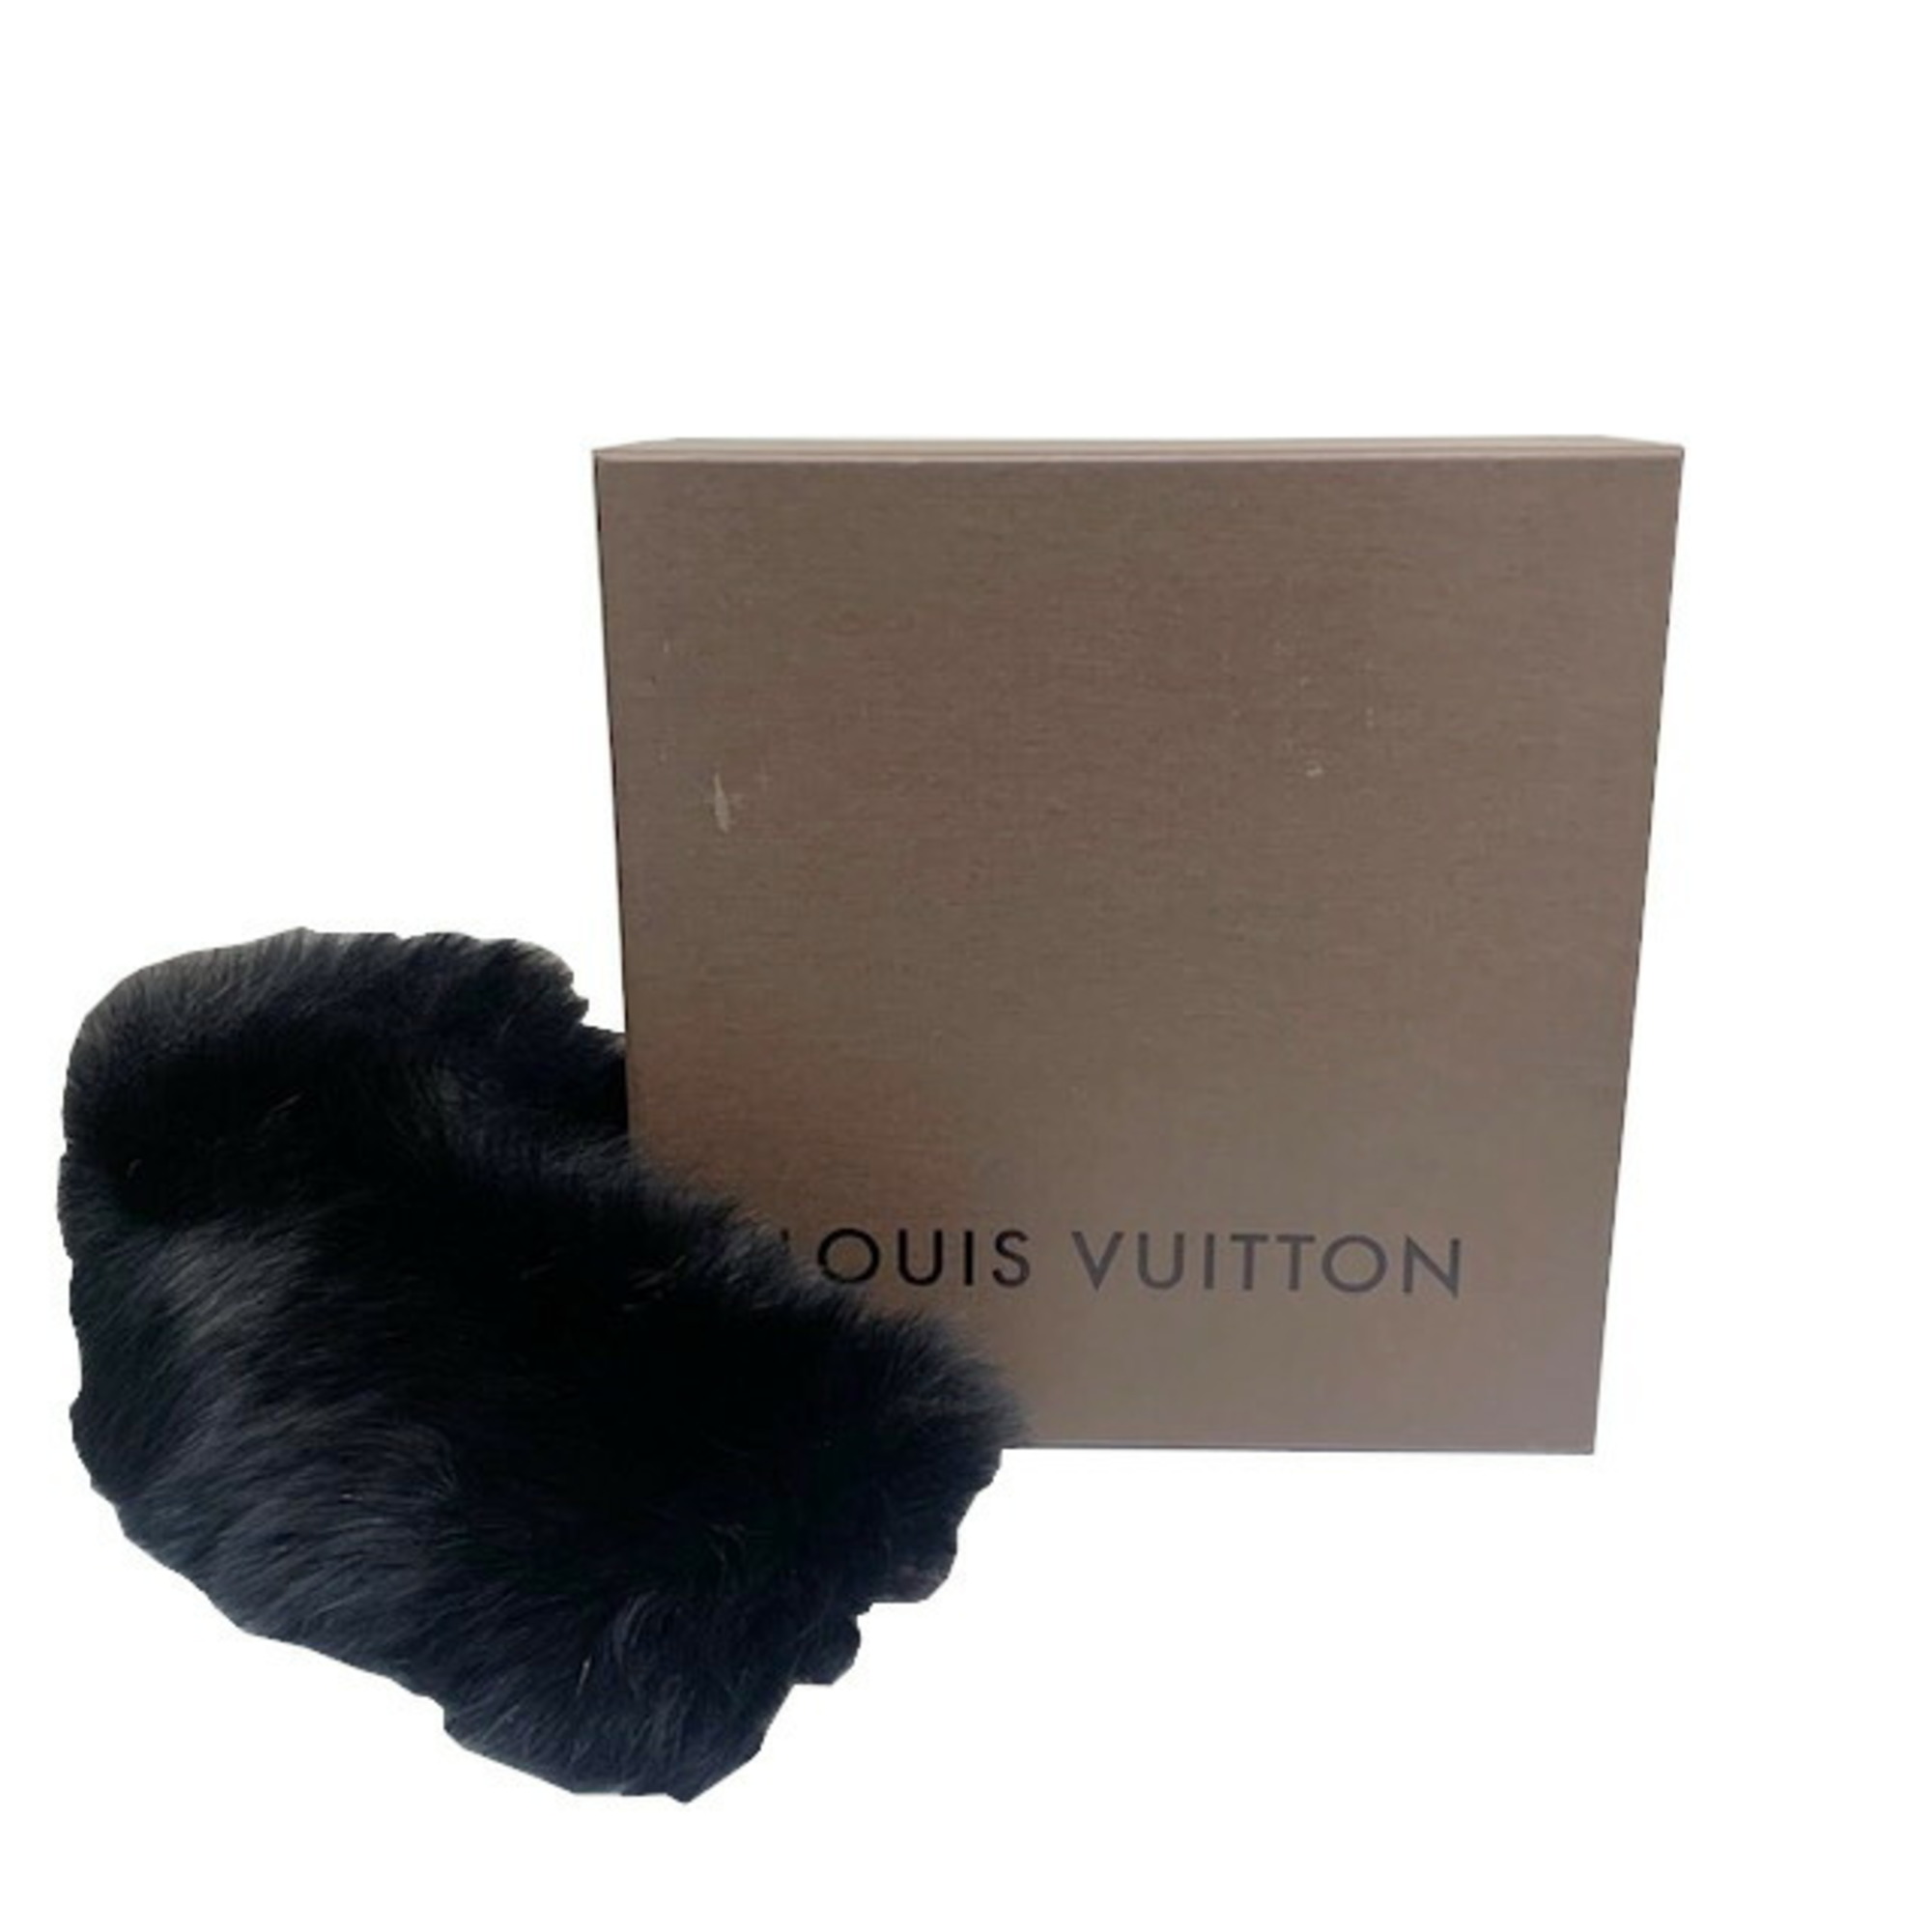 LOUIS VUITTON Louis Vuitton Bandeau Fleur Muffler Scarf Silk Fox Twilly M74786 Black Beige Ivory Ladies